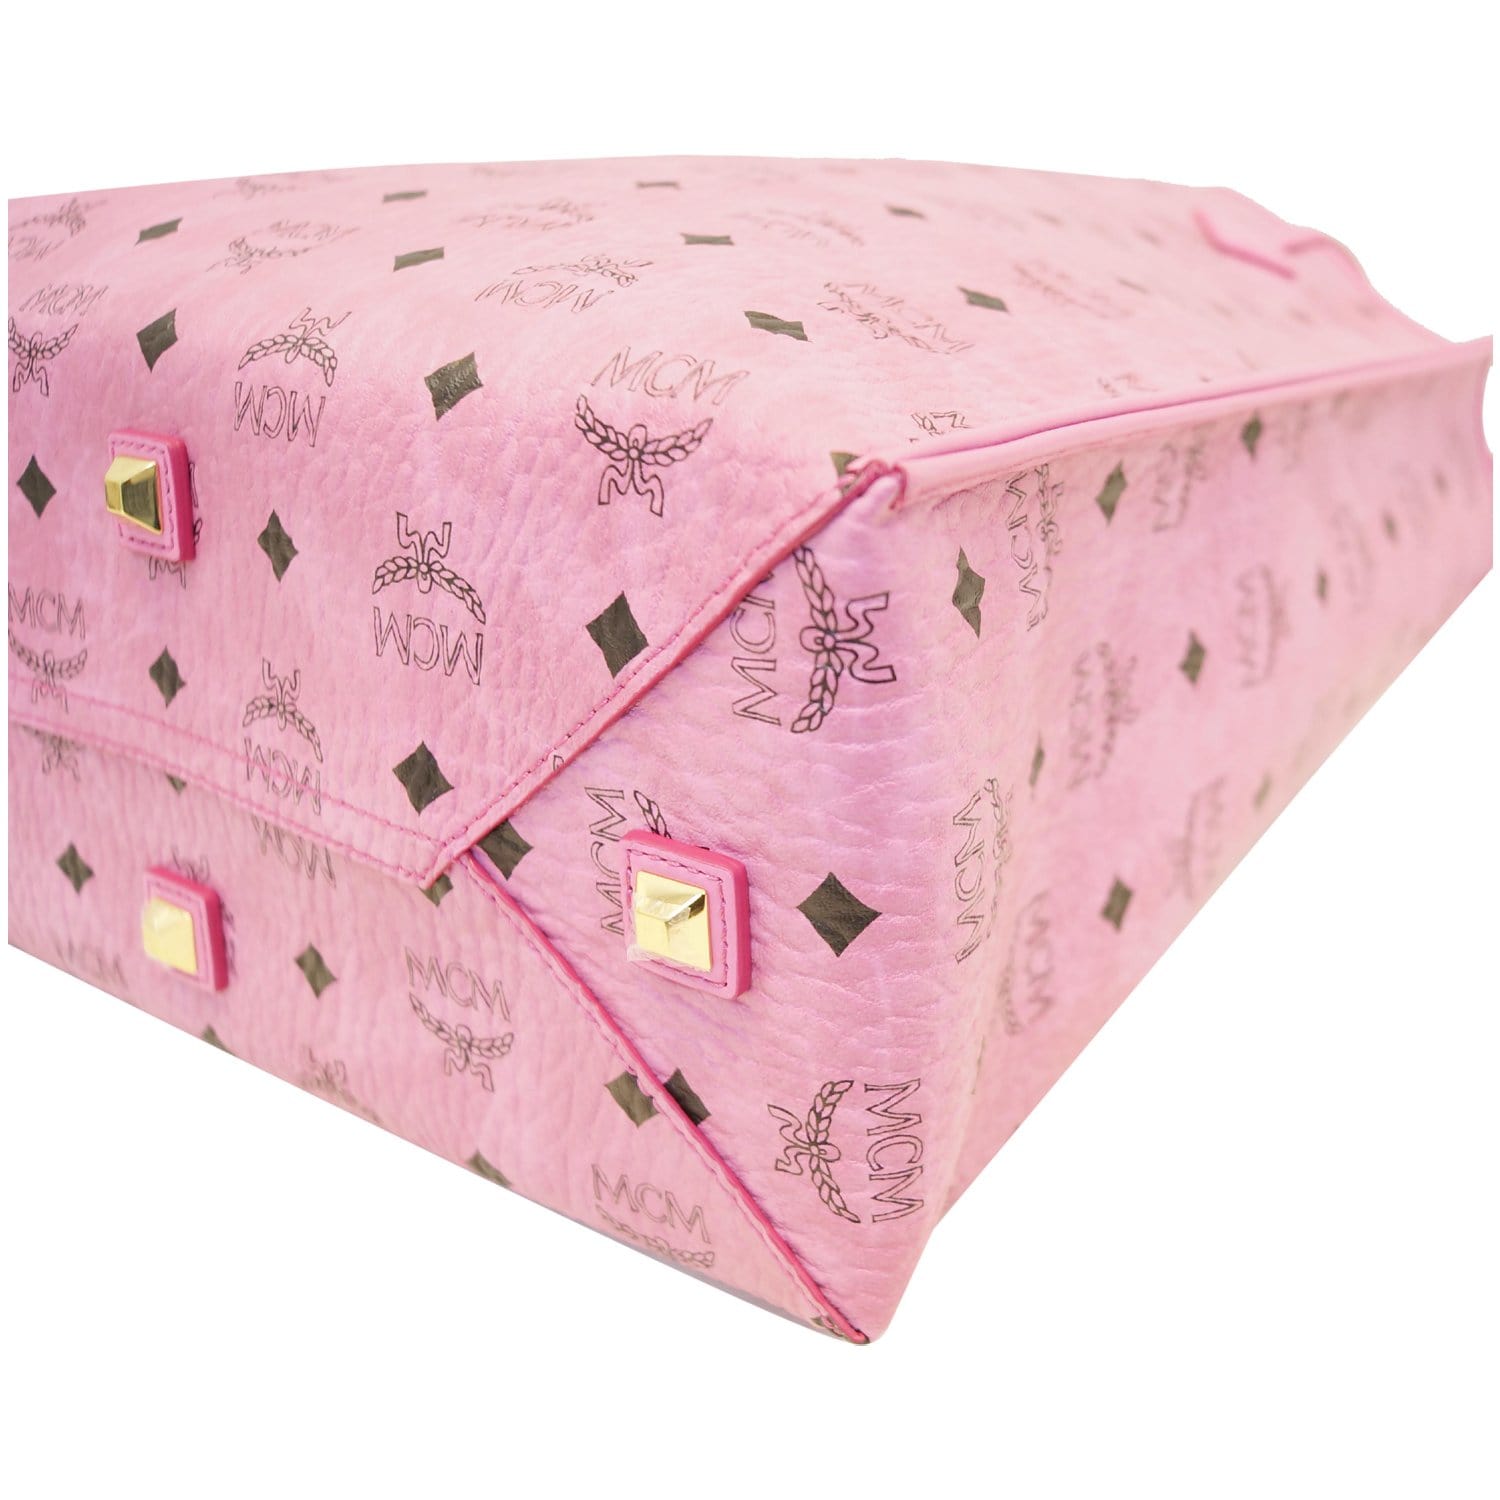 MCM, Bags, Firm Mcm Medium Aren Visetos Soft Pink Shopper Tote No Pouch